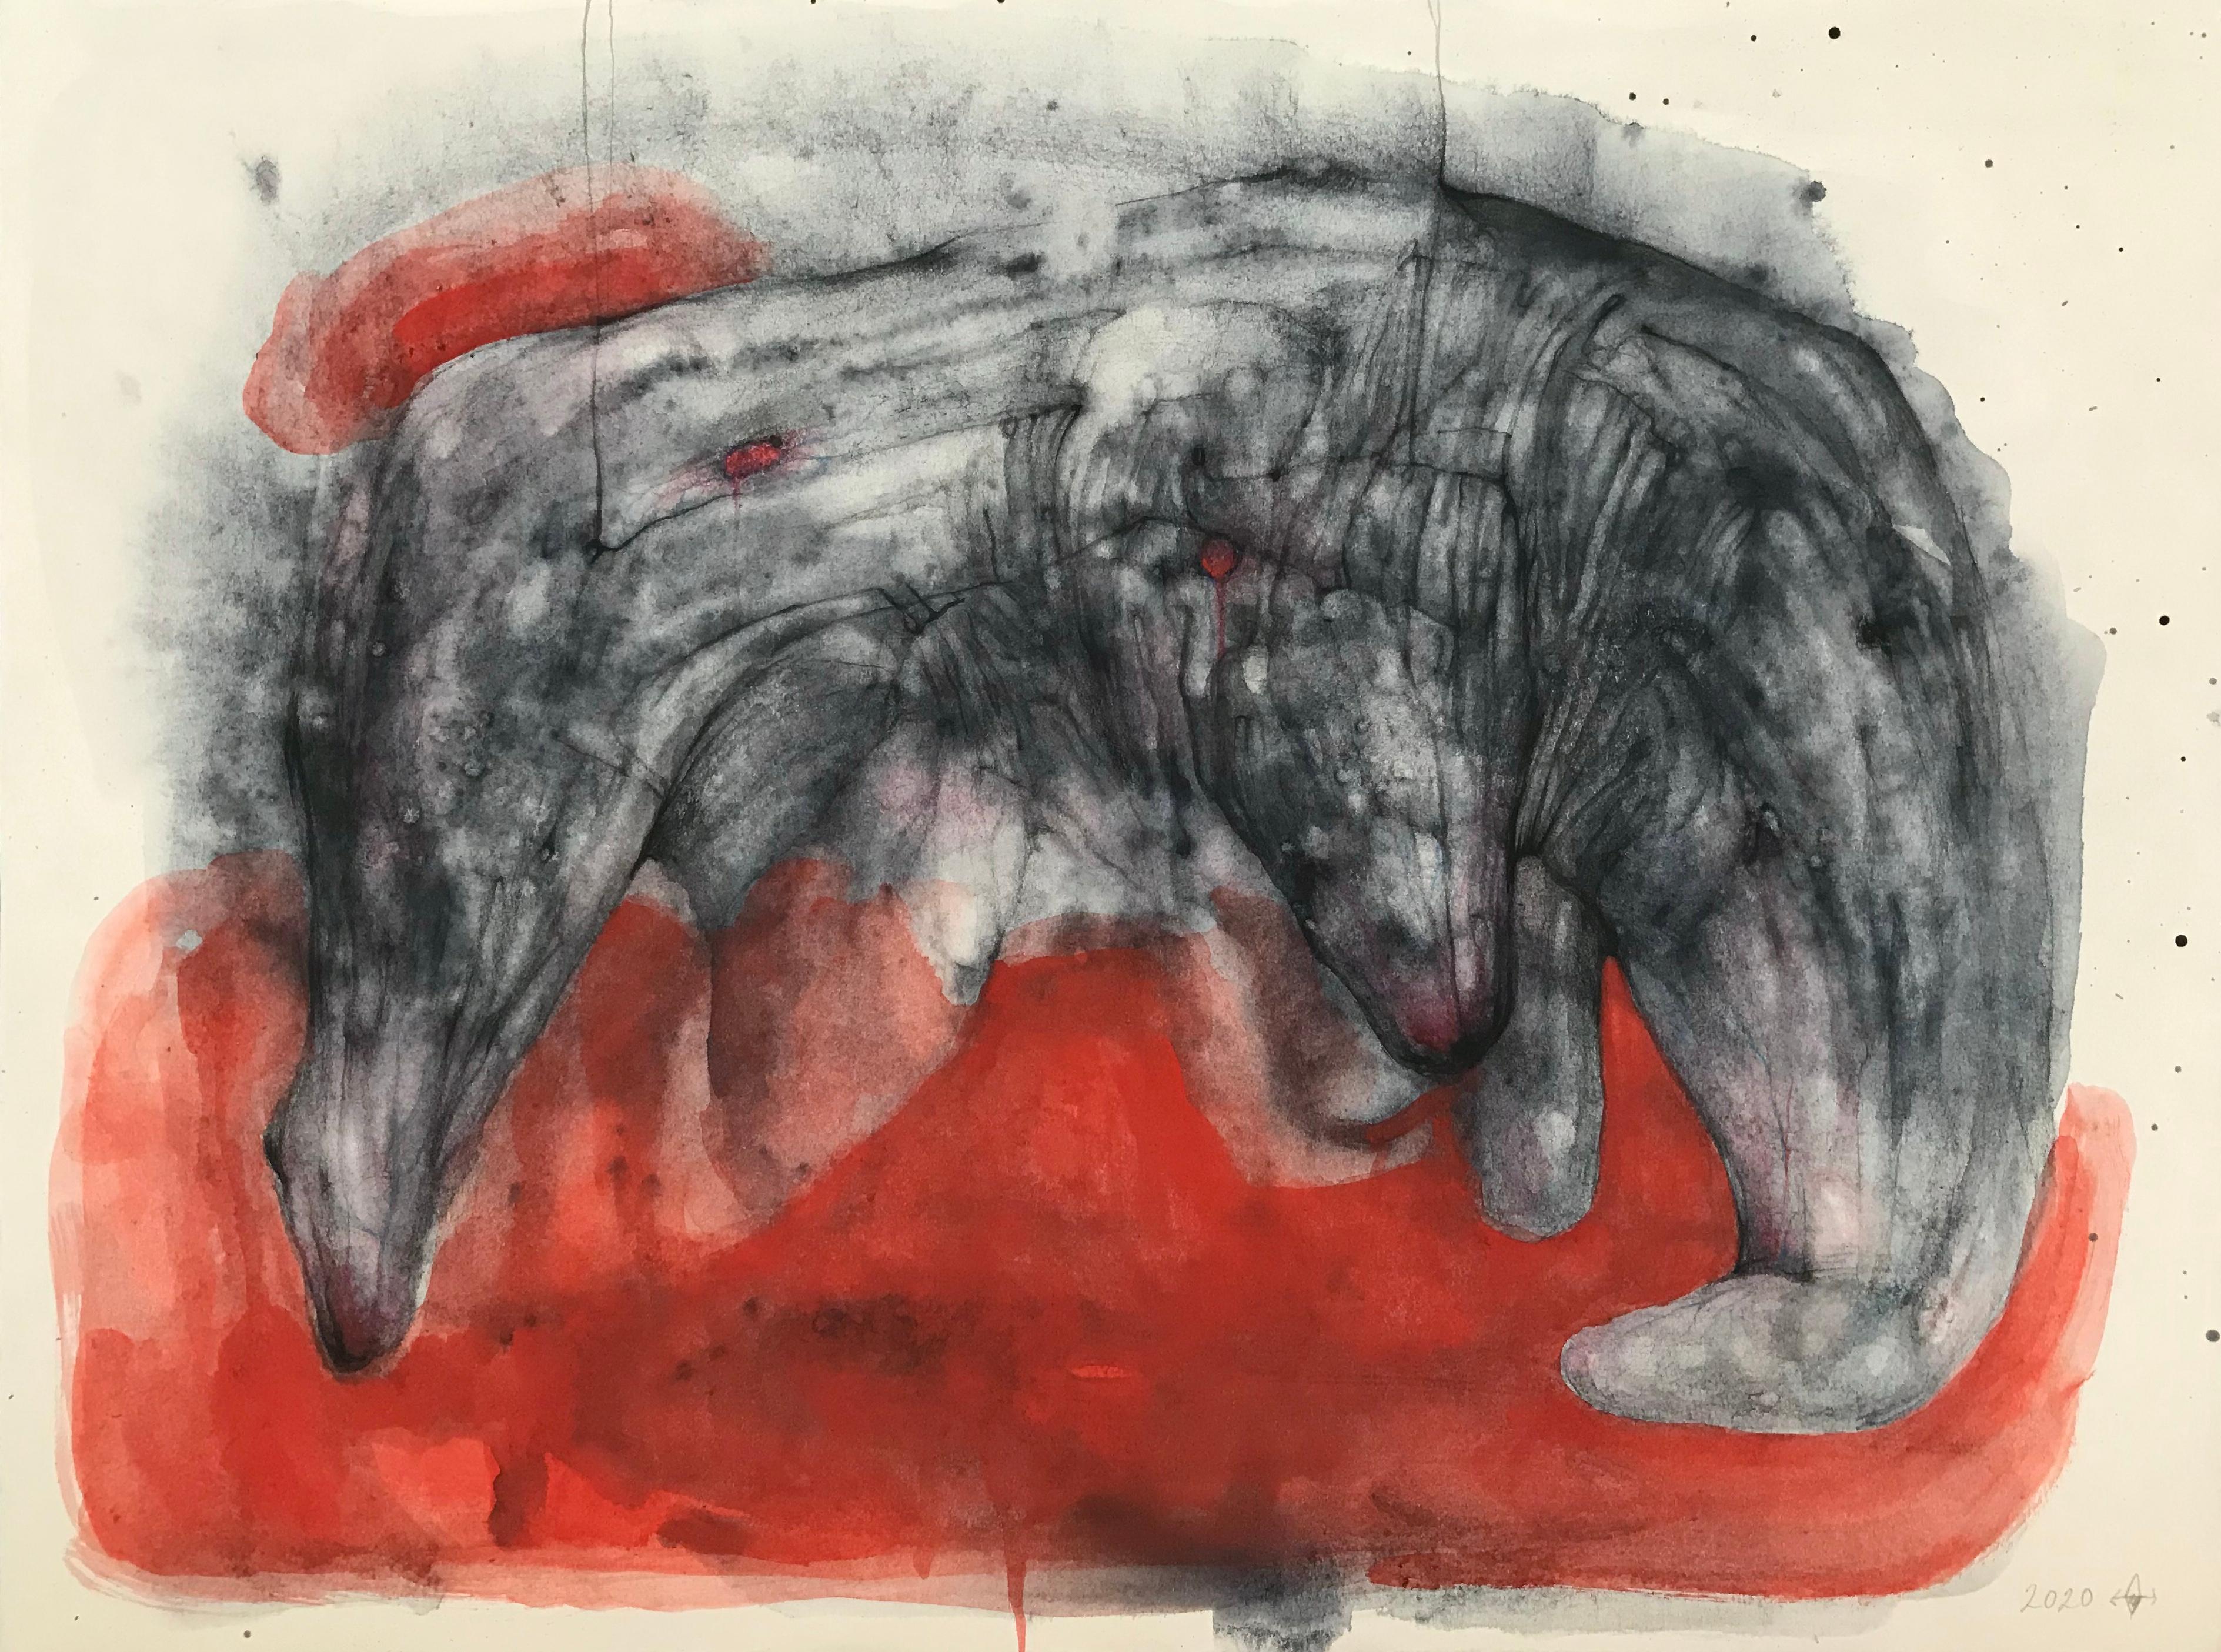 Dmitrii Drugakov Nude - Carcass - expressive line drawing 